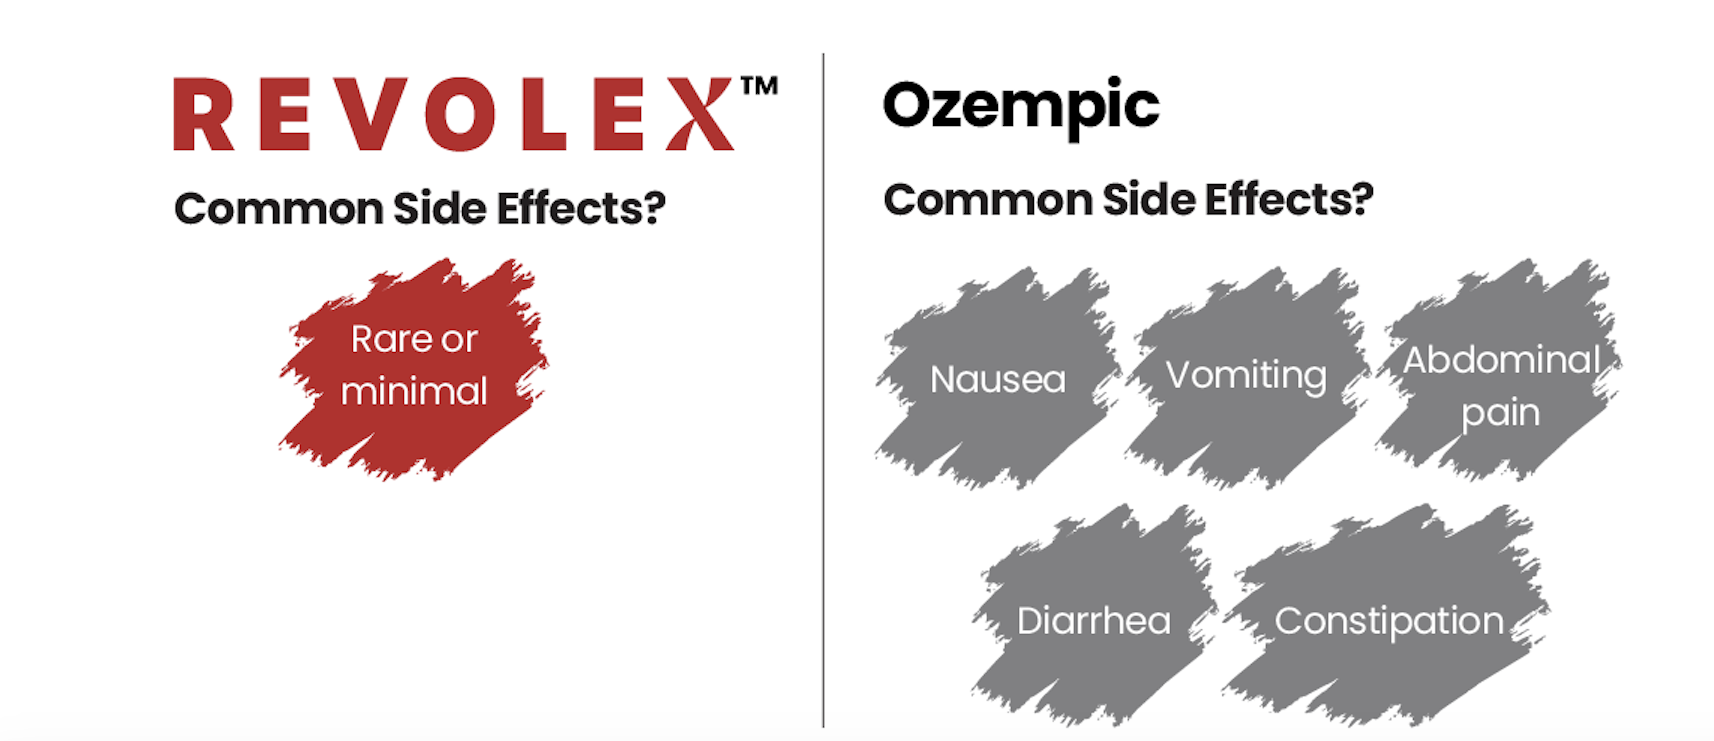 Revolex vs Ozempic Side Effects